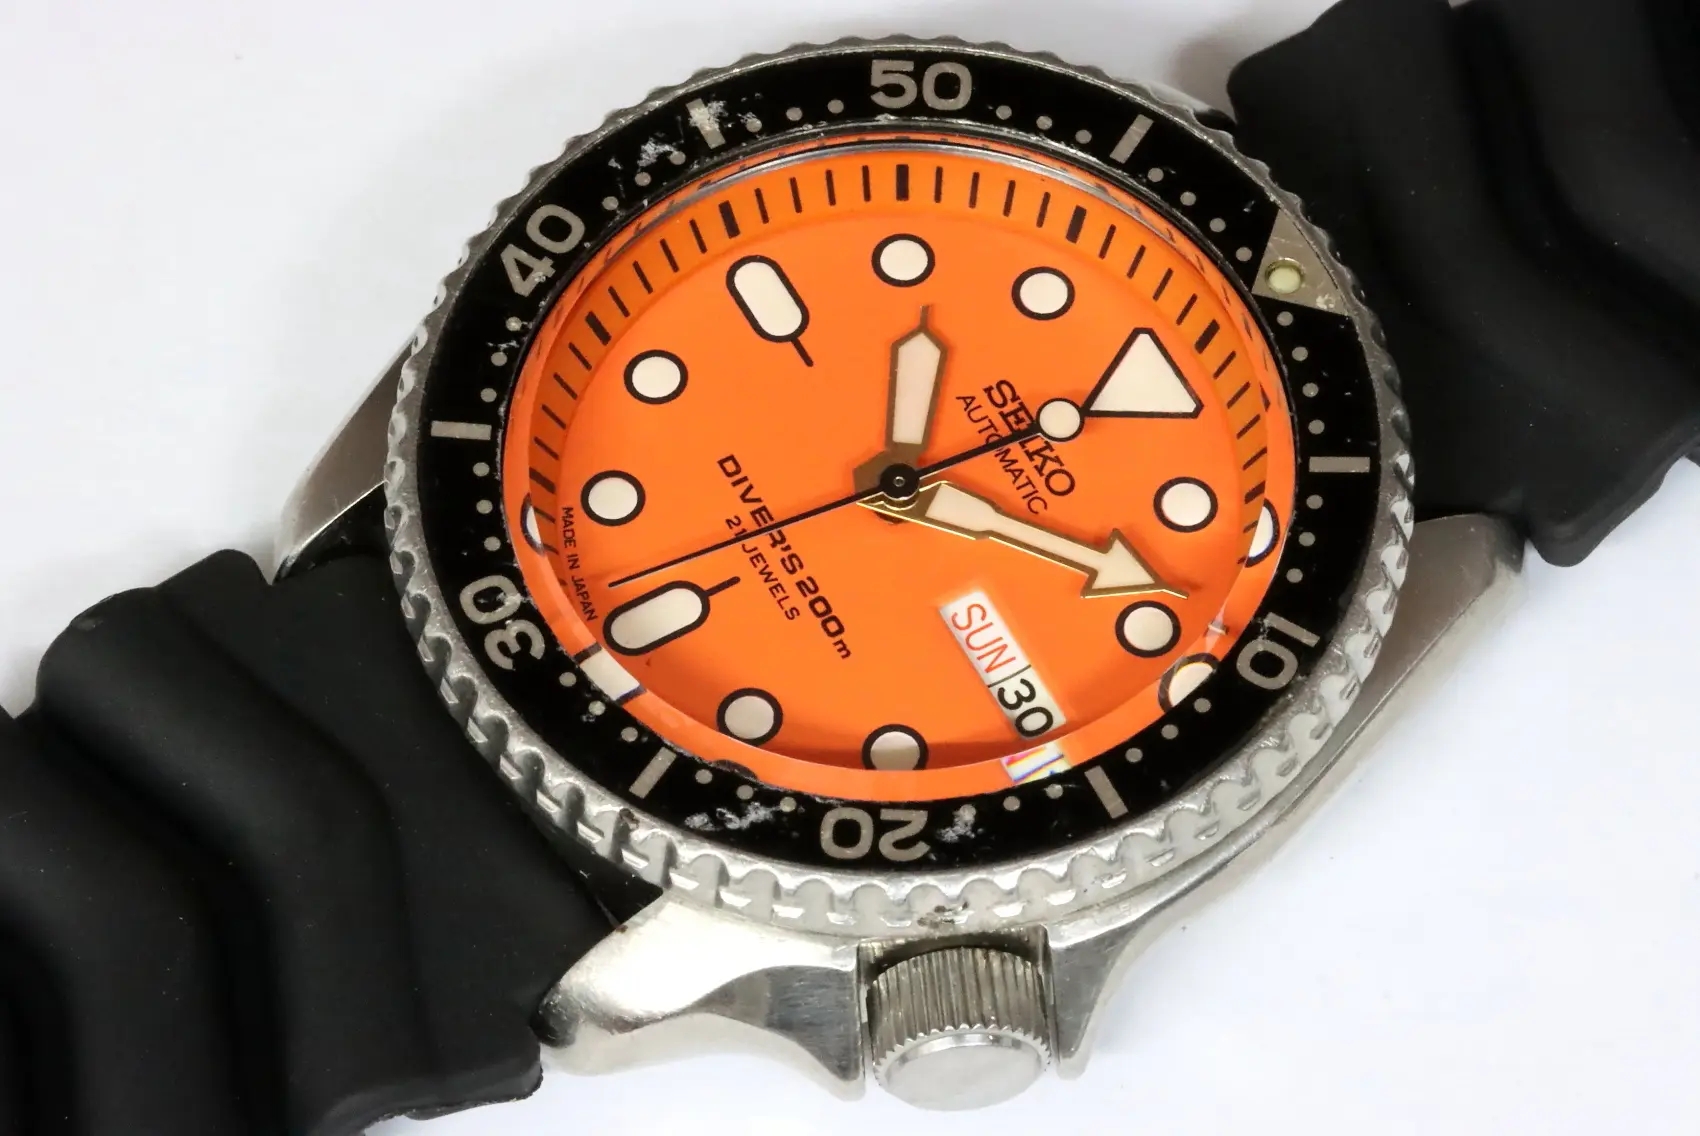 Seiko 7S26-0020 SKX011J automatic diver's watch